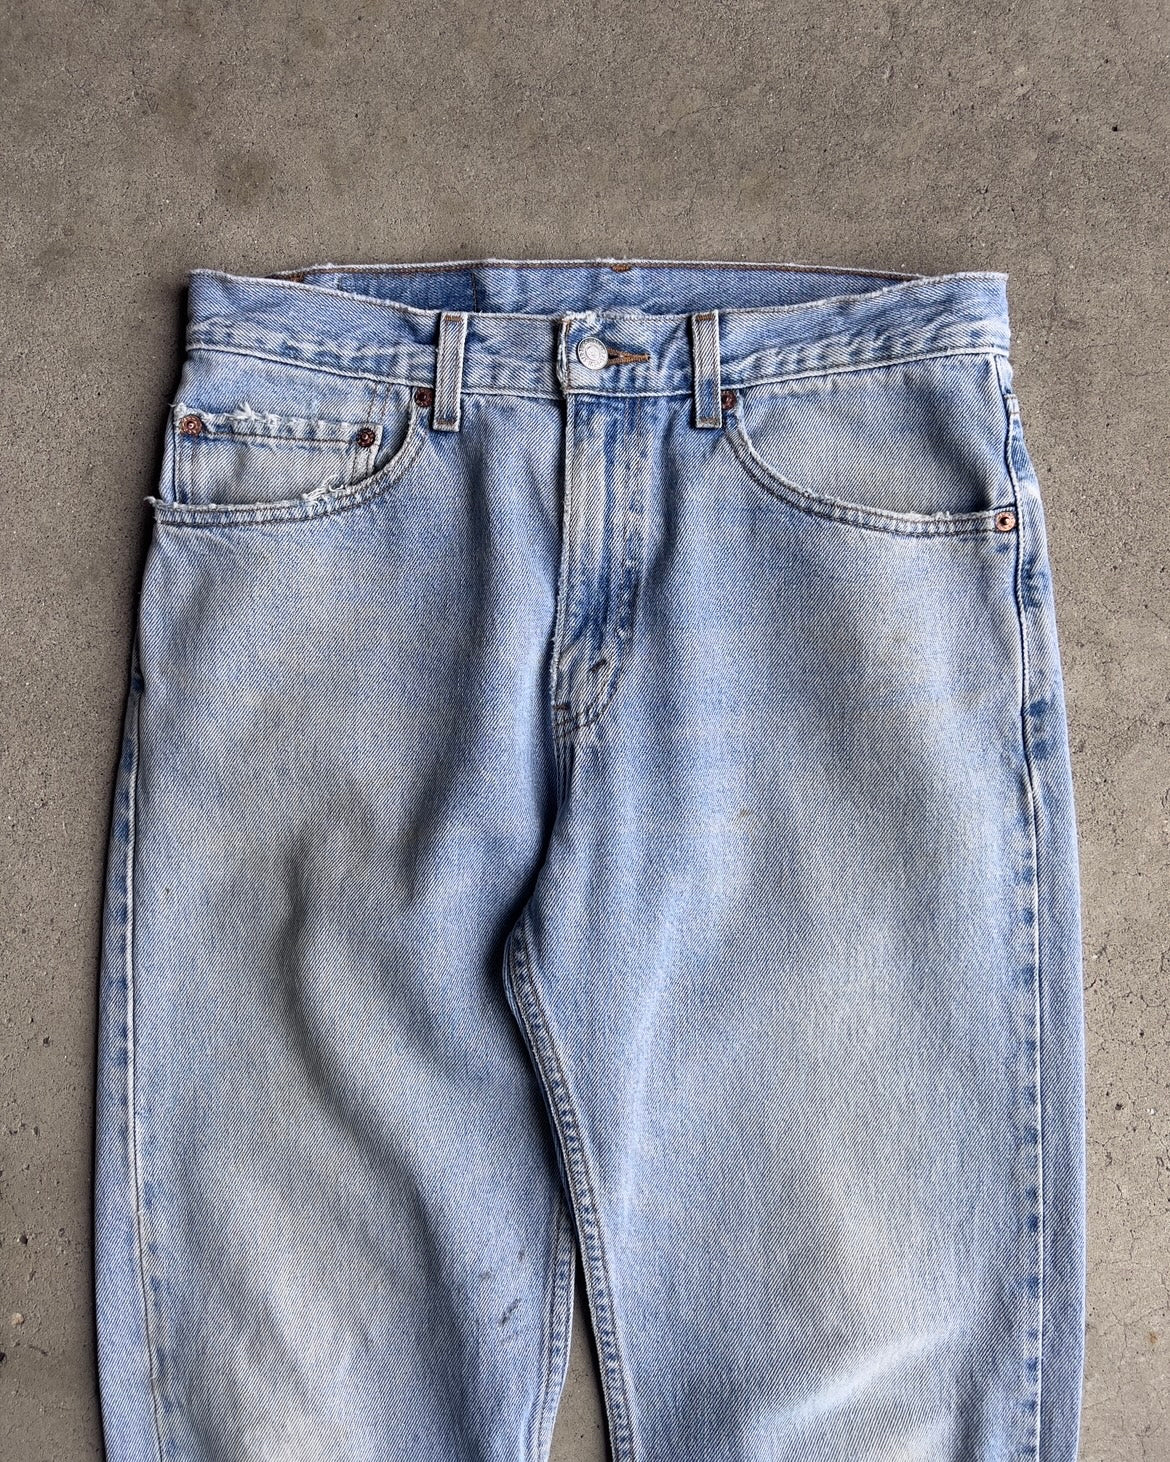 50's Straight Fit Men's Jeans - Light Wash